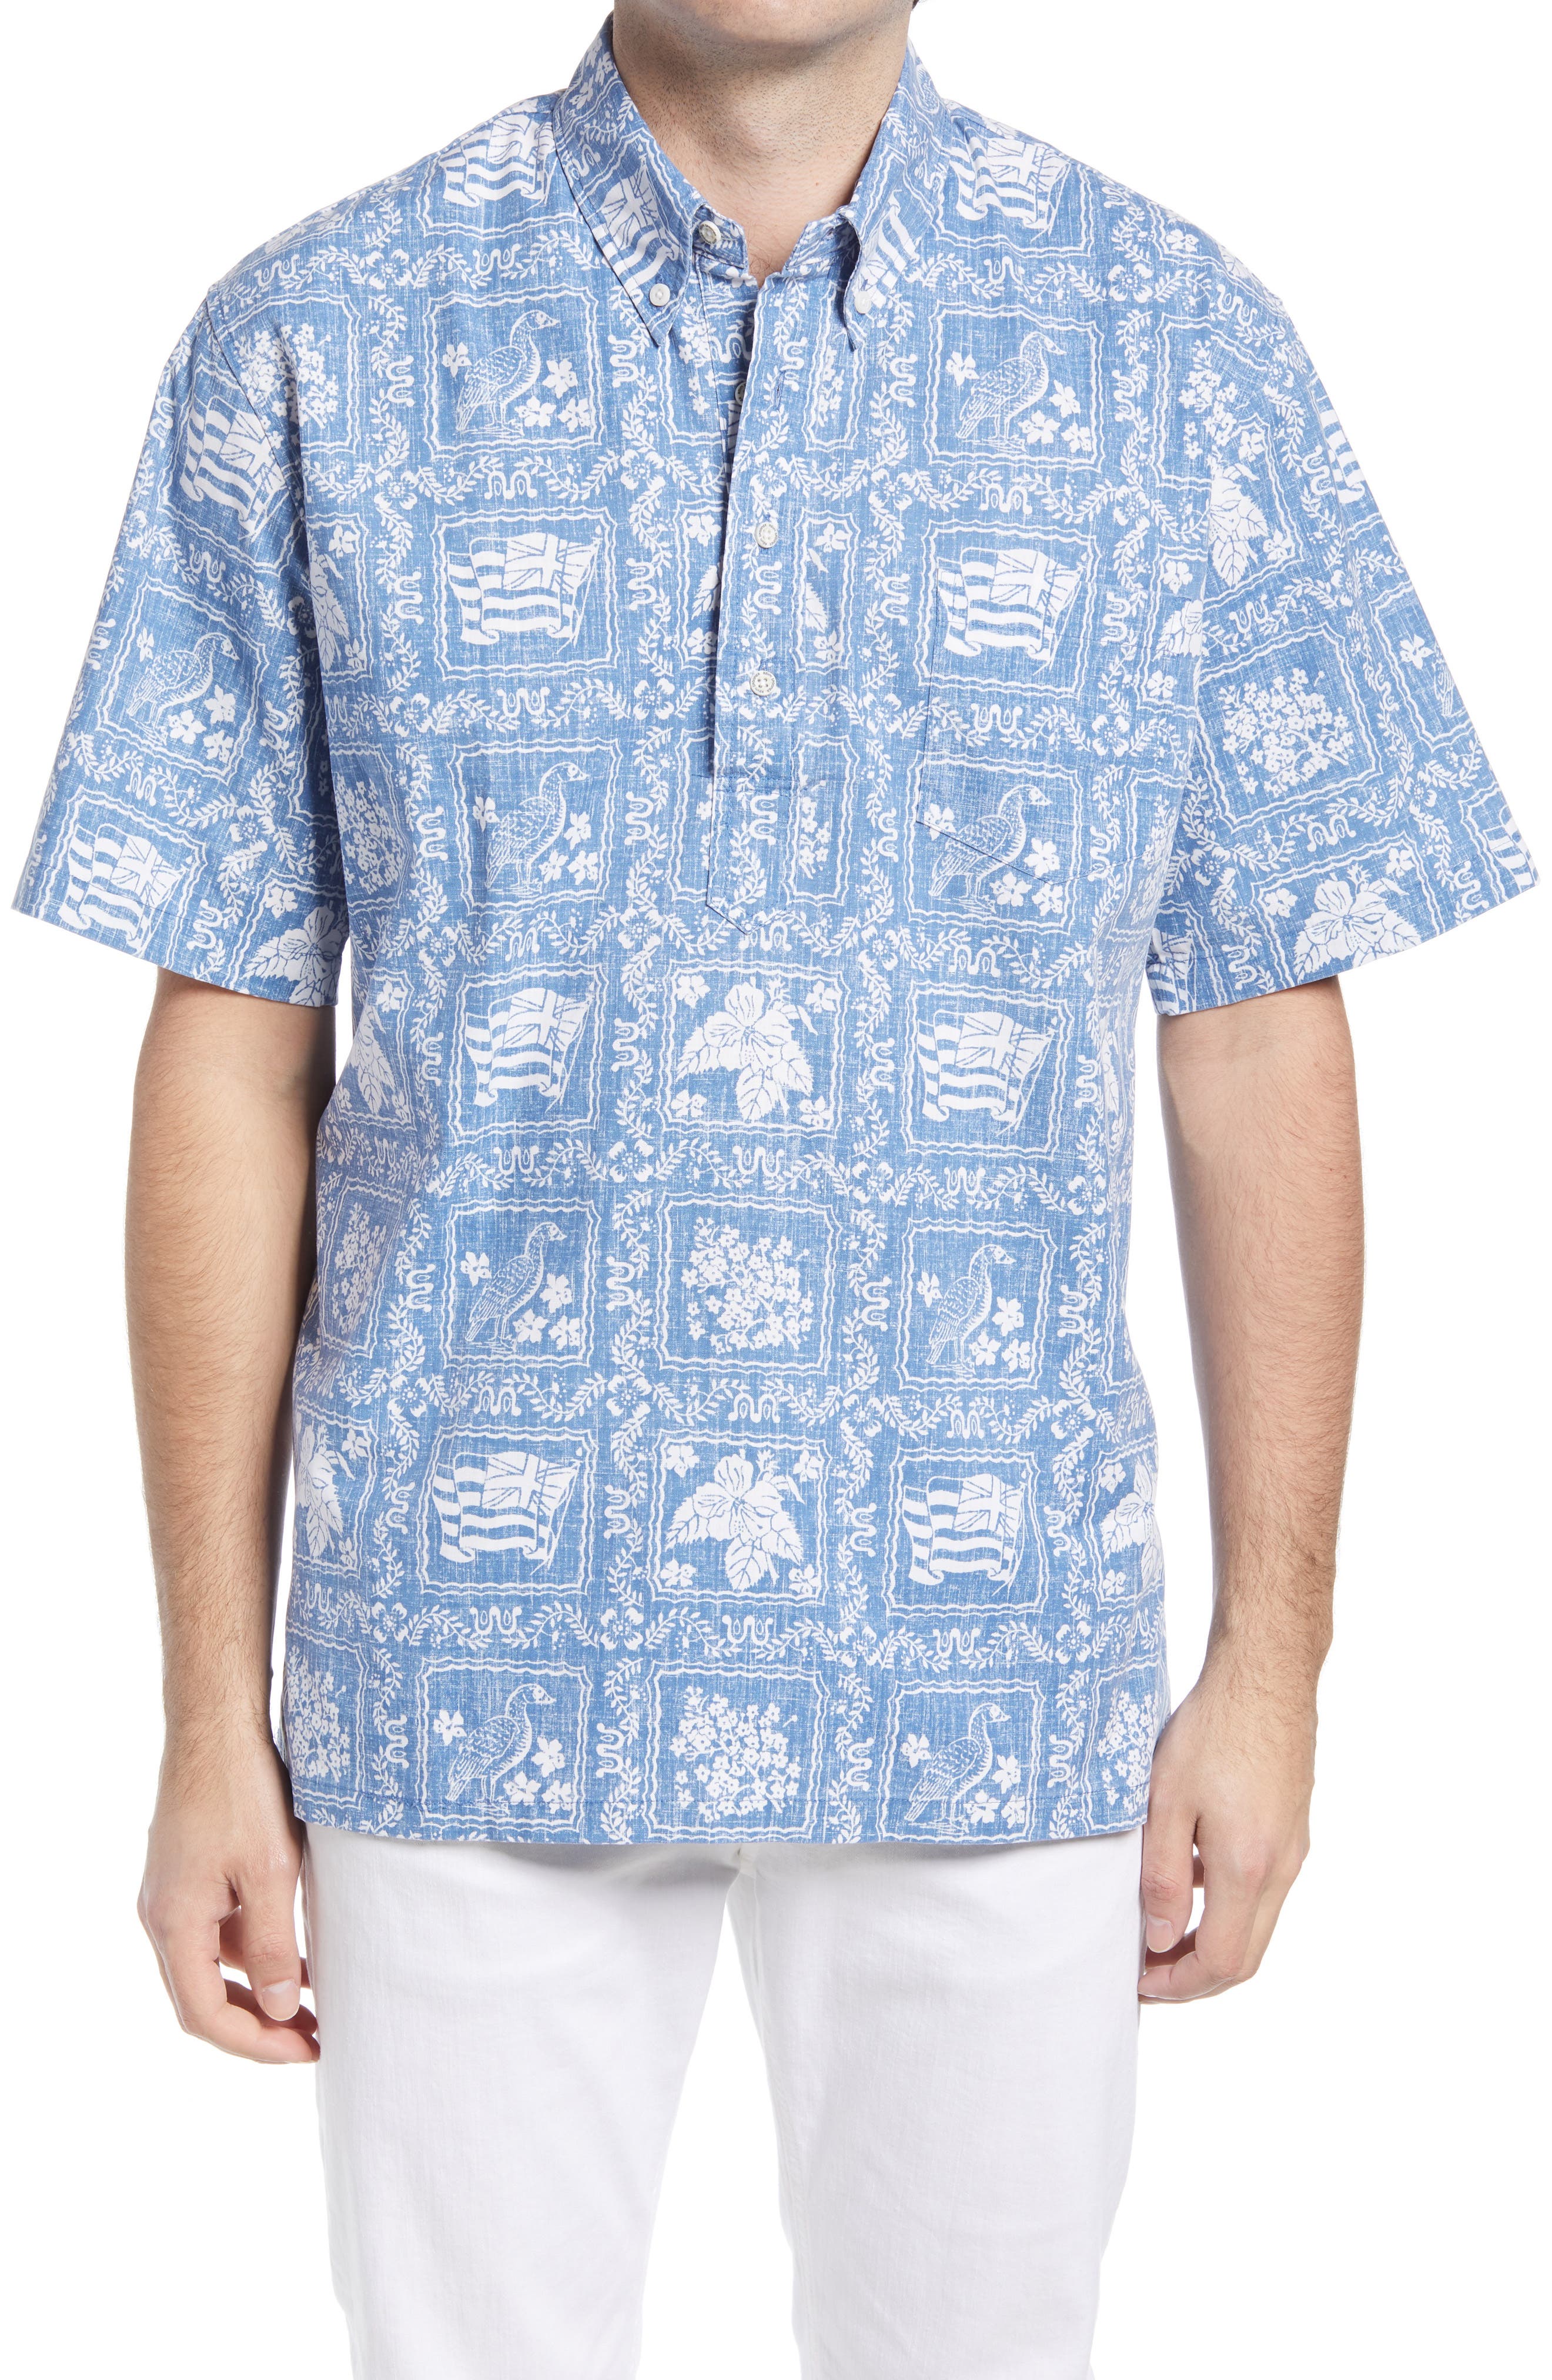 1950s Men’s Shirt Styles – Casual, Gaucho, Camp Reyn Spooner Lahaina Sailor Regular Fit Popover Shirt in Denim at Nordstrom Size Medium $109.50 AT vintagedancer.com